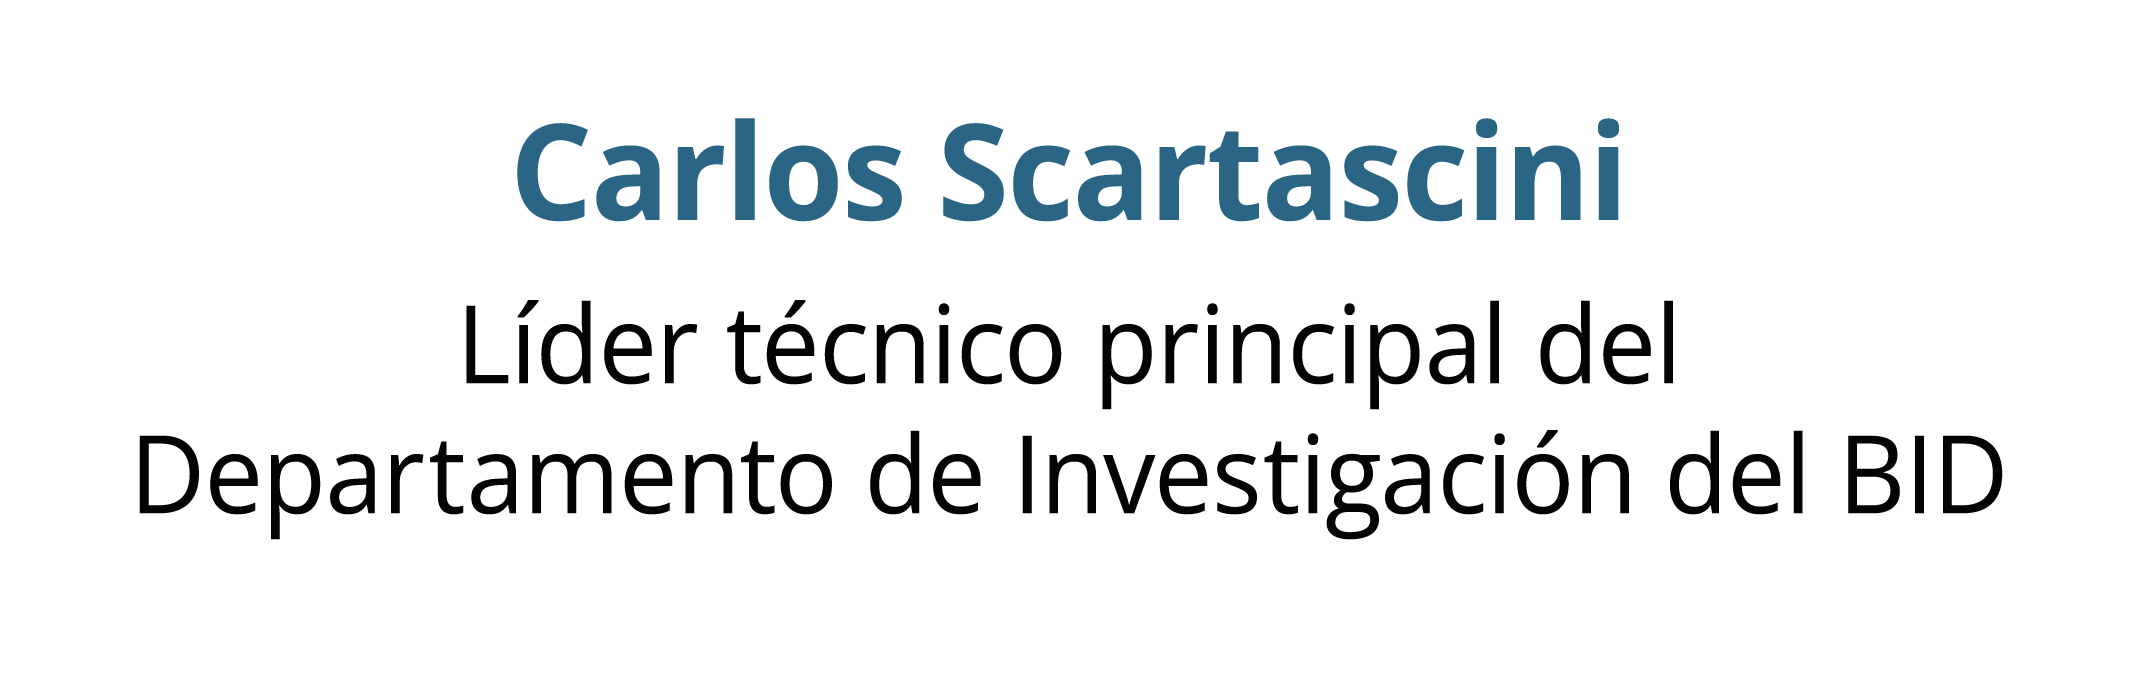 Carlos Scartascini